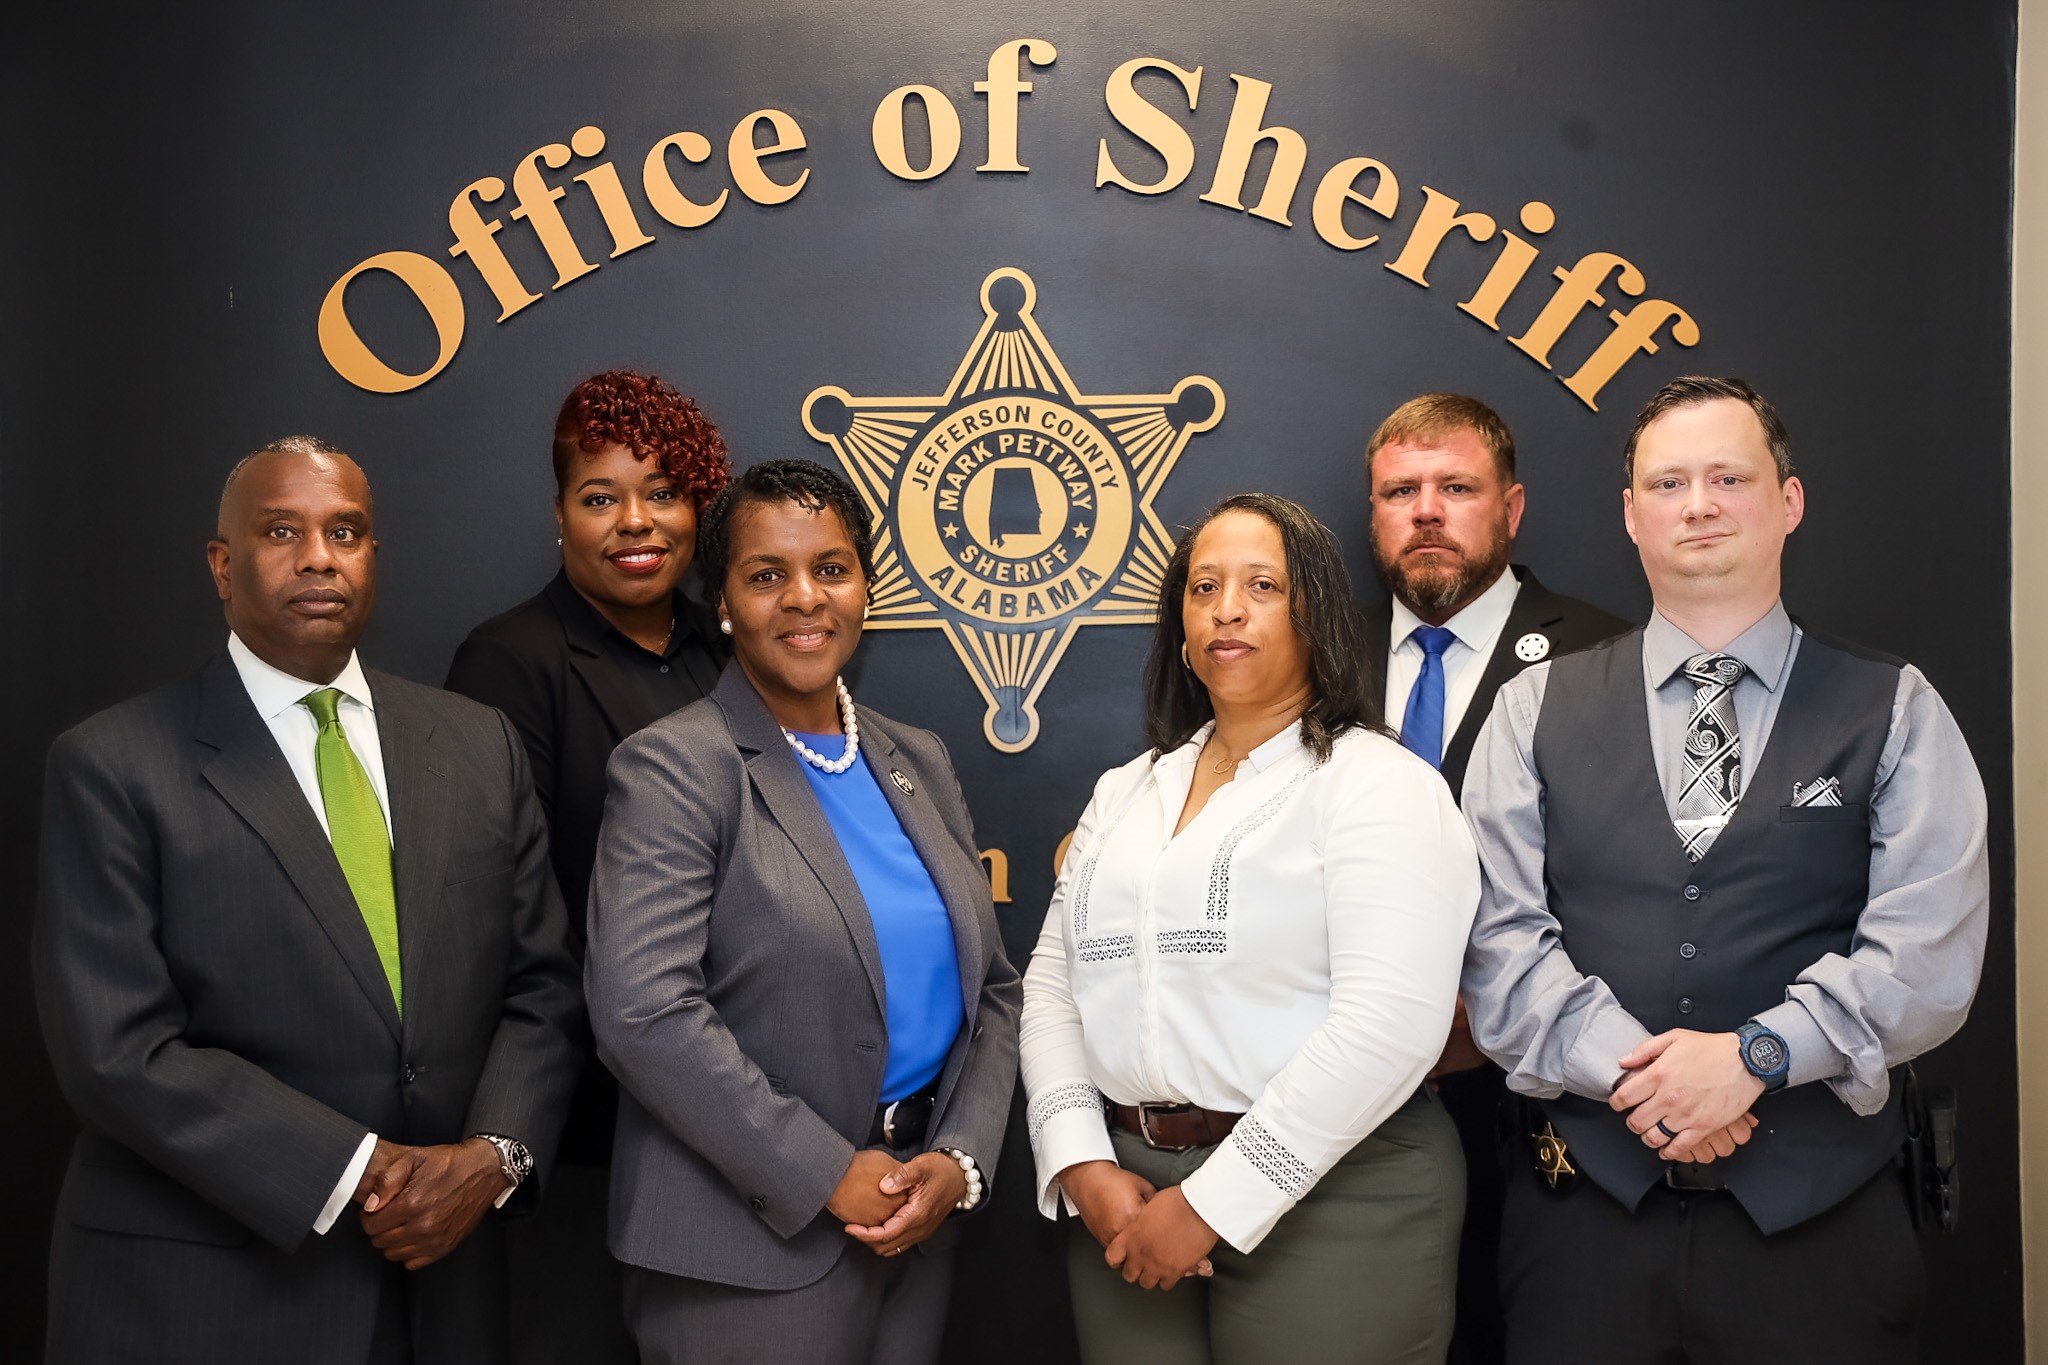 Jefferson-County-Sheriff-Department-Alabama---Criminal-Blurb